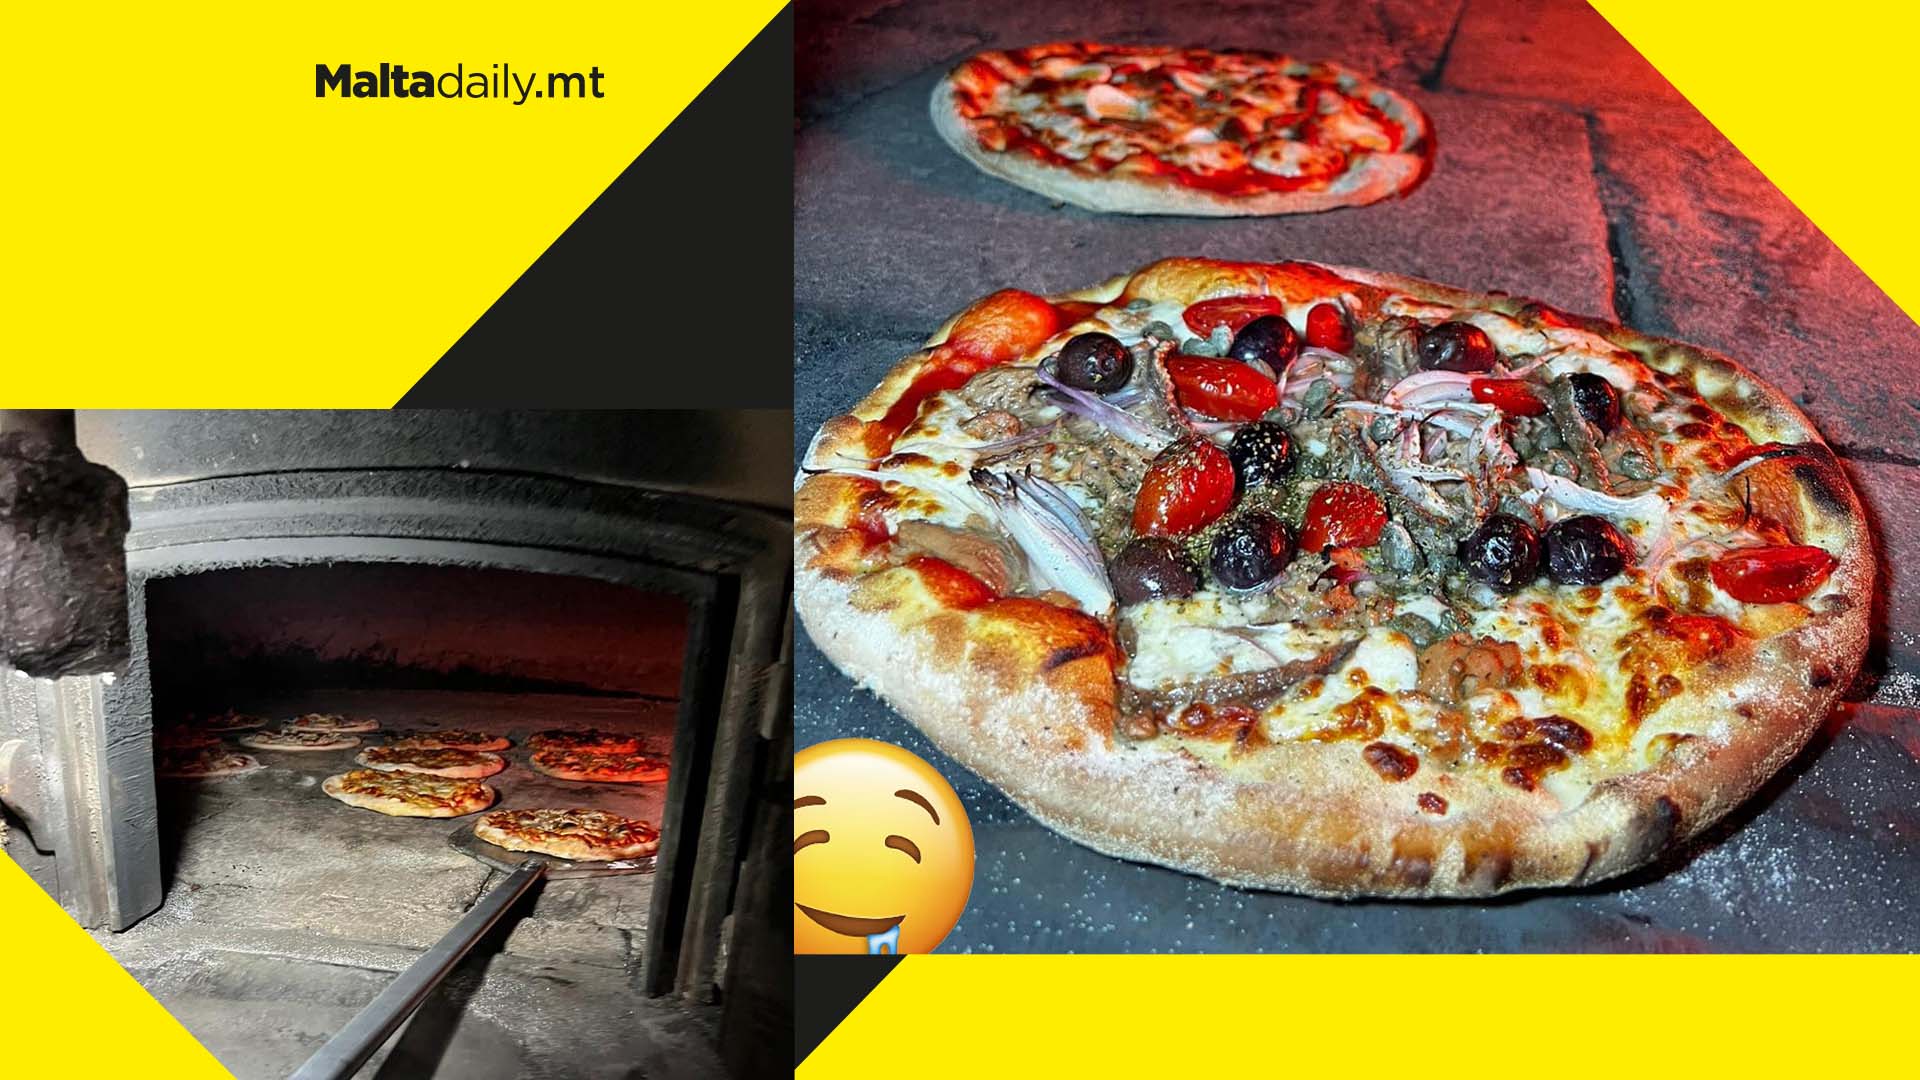 This new pizzeria in Rabat is bringing Maxokk & Mekren vibes to Malta